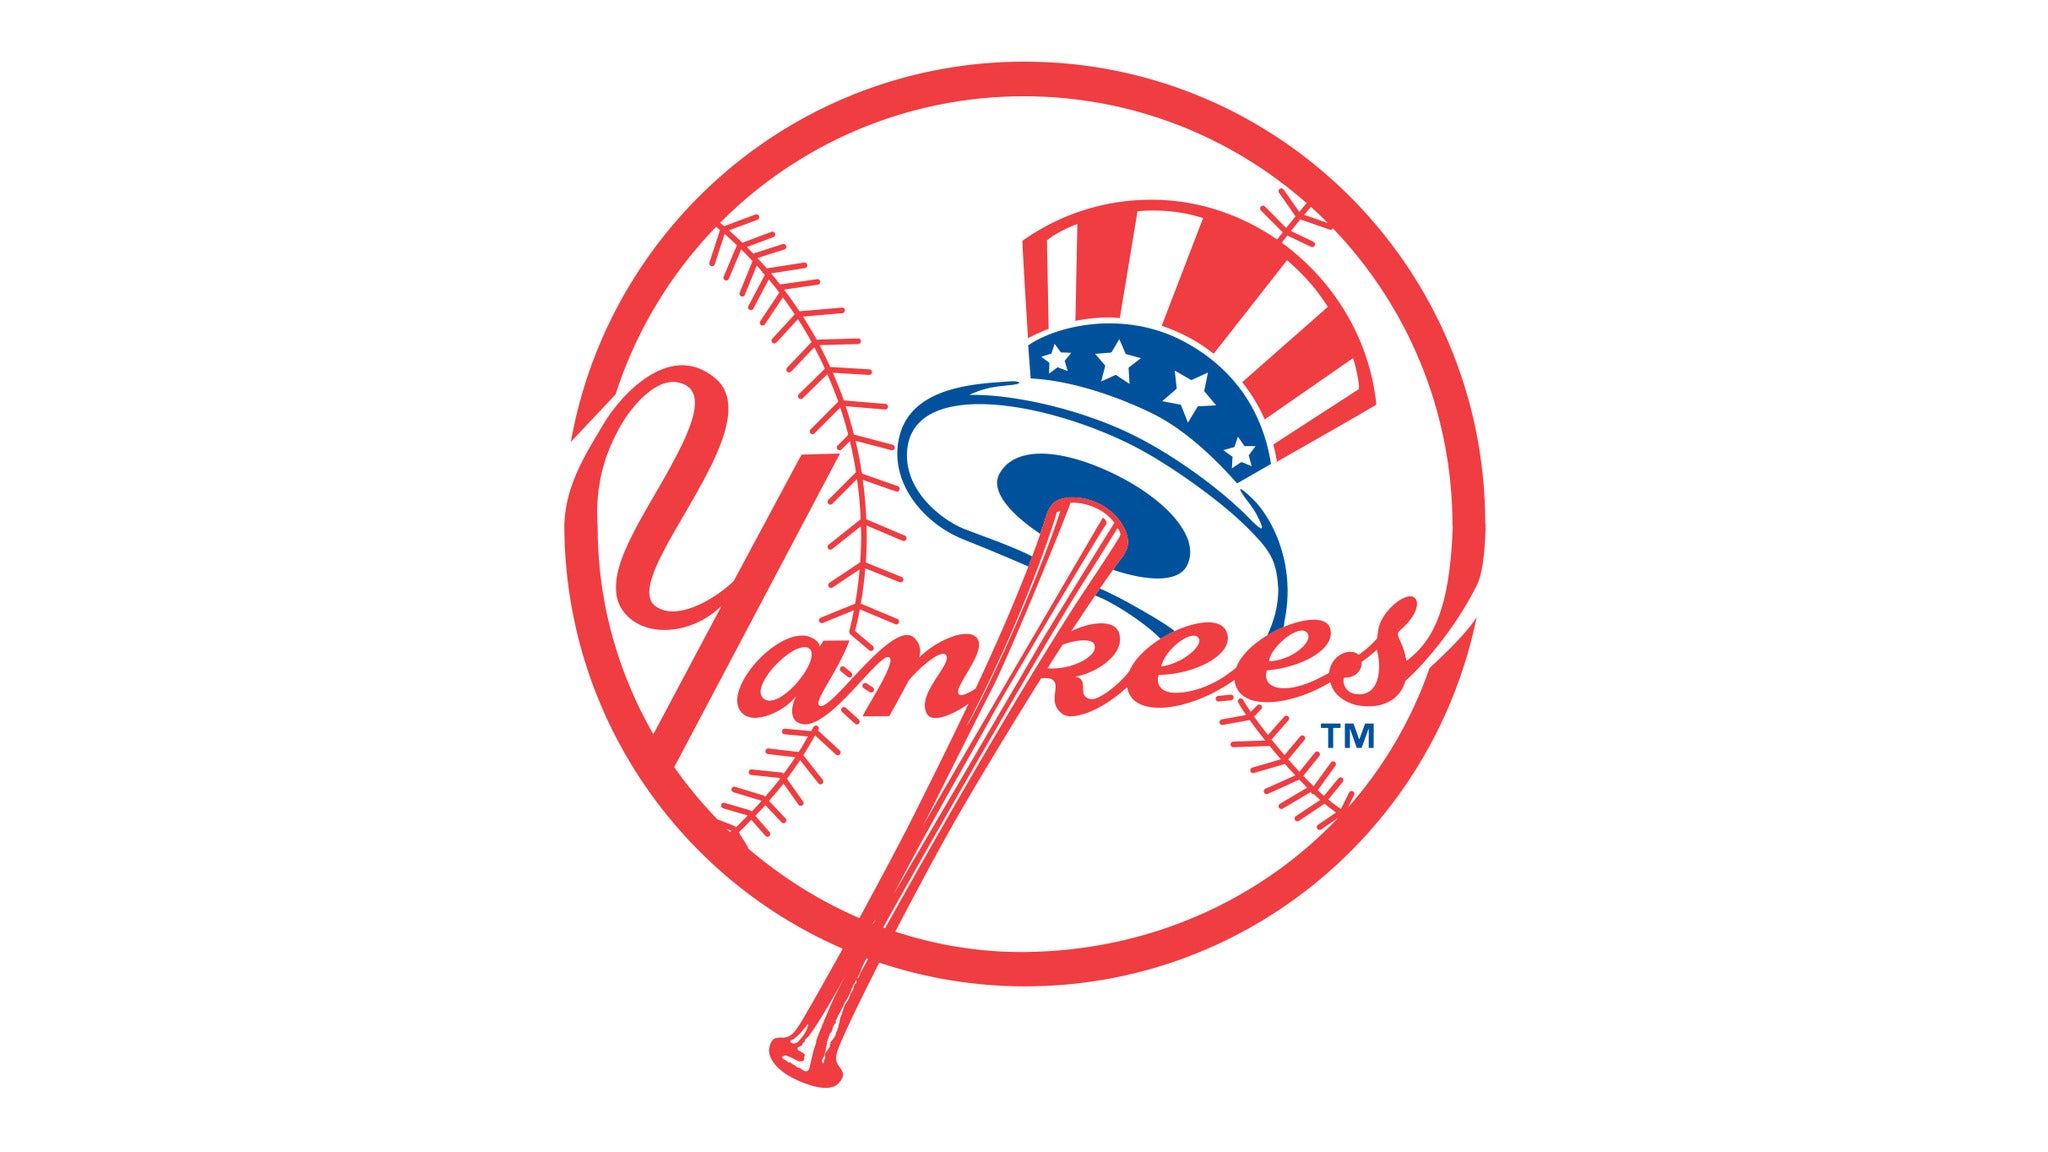 New York Yankees v. Toronto Blue Jays * Premium Seating